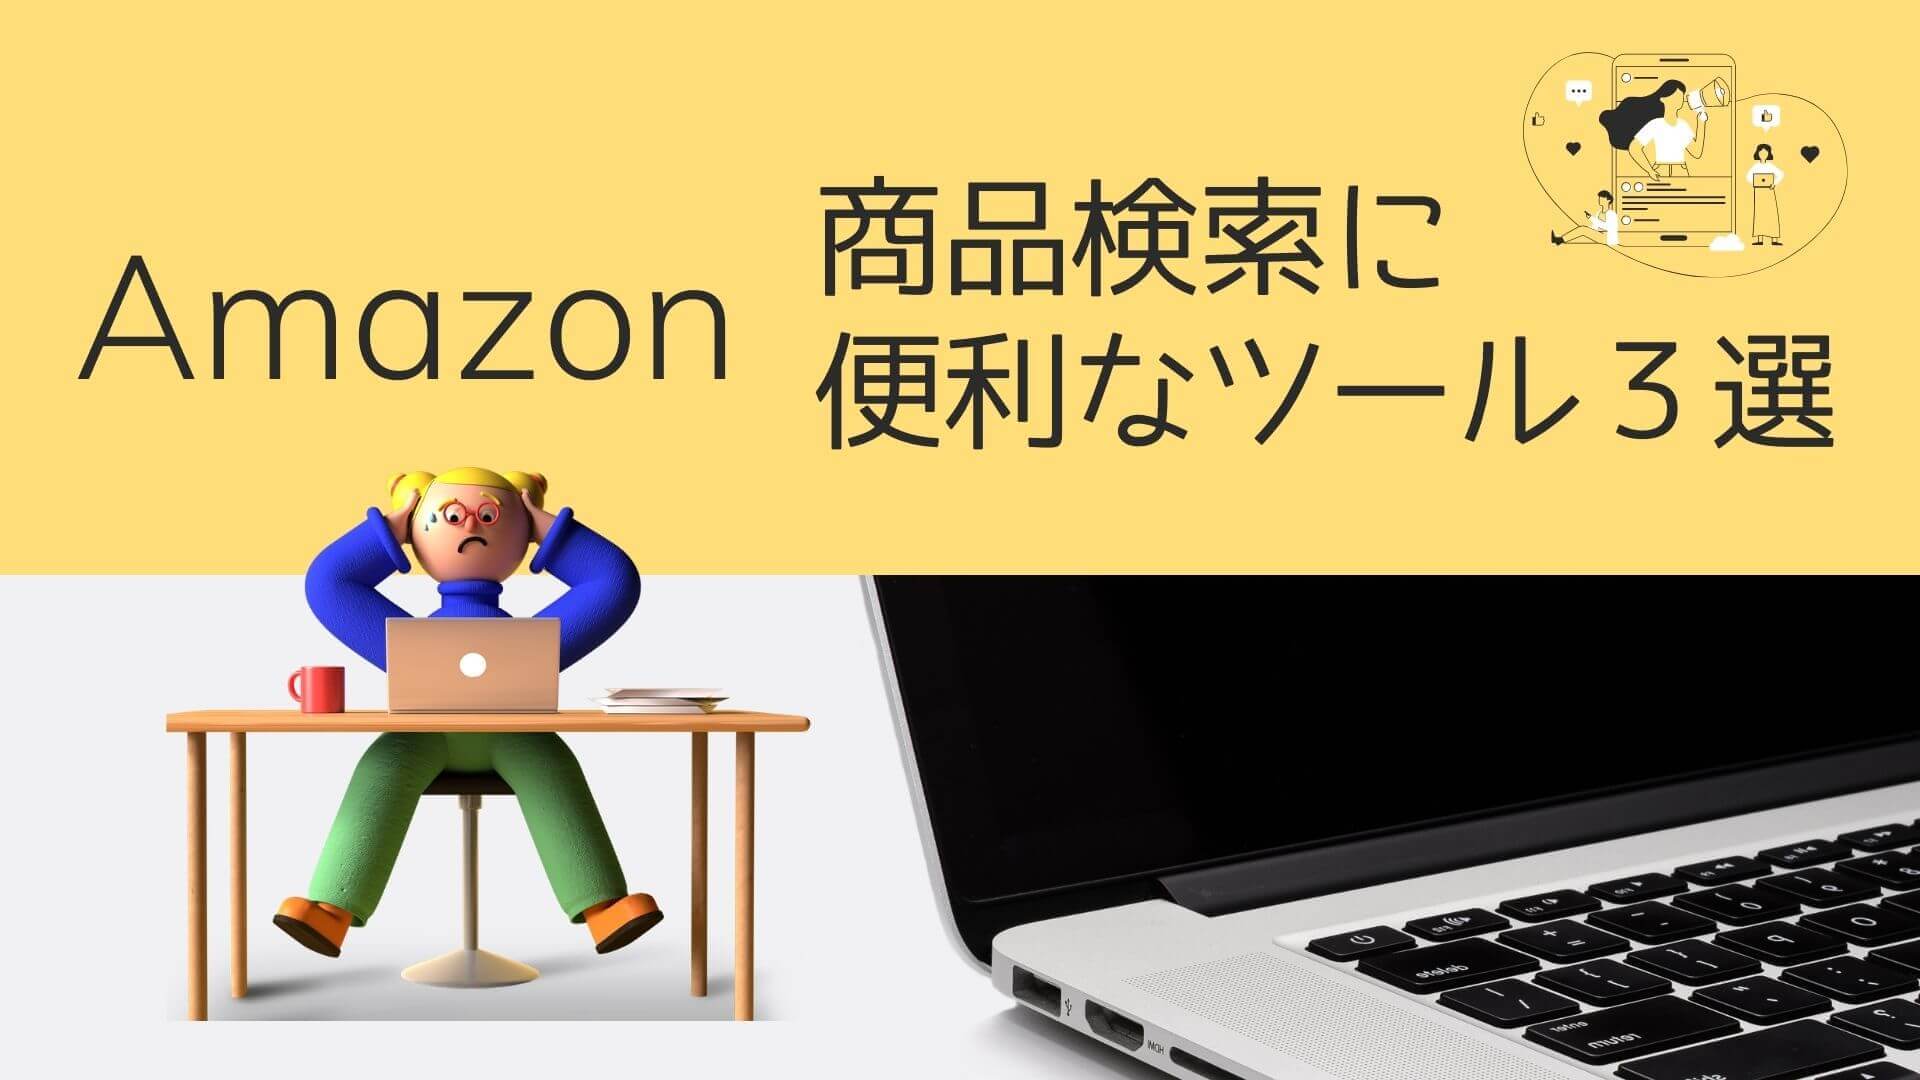 Amazon.co.jp 商品検索に便利なツール３選のアイキャッチ